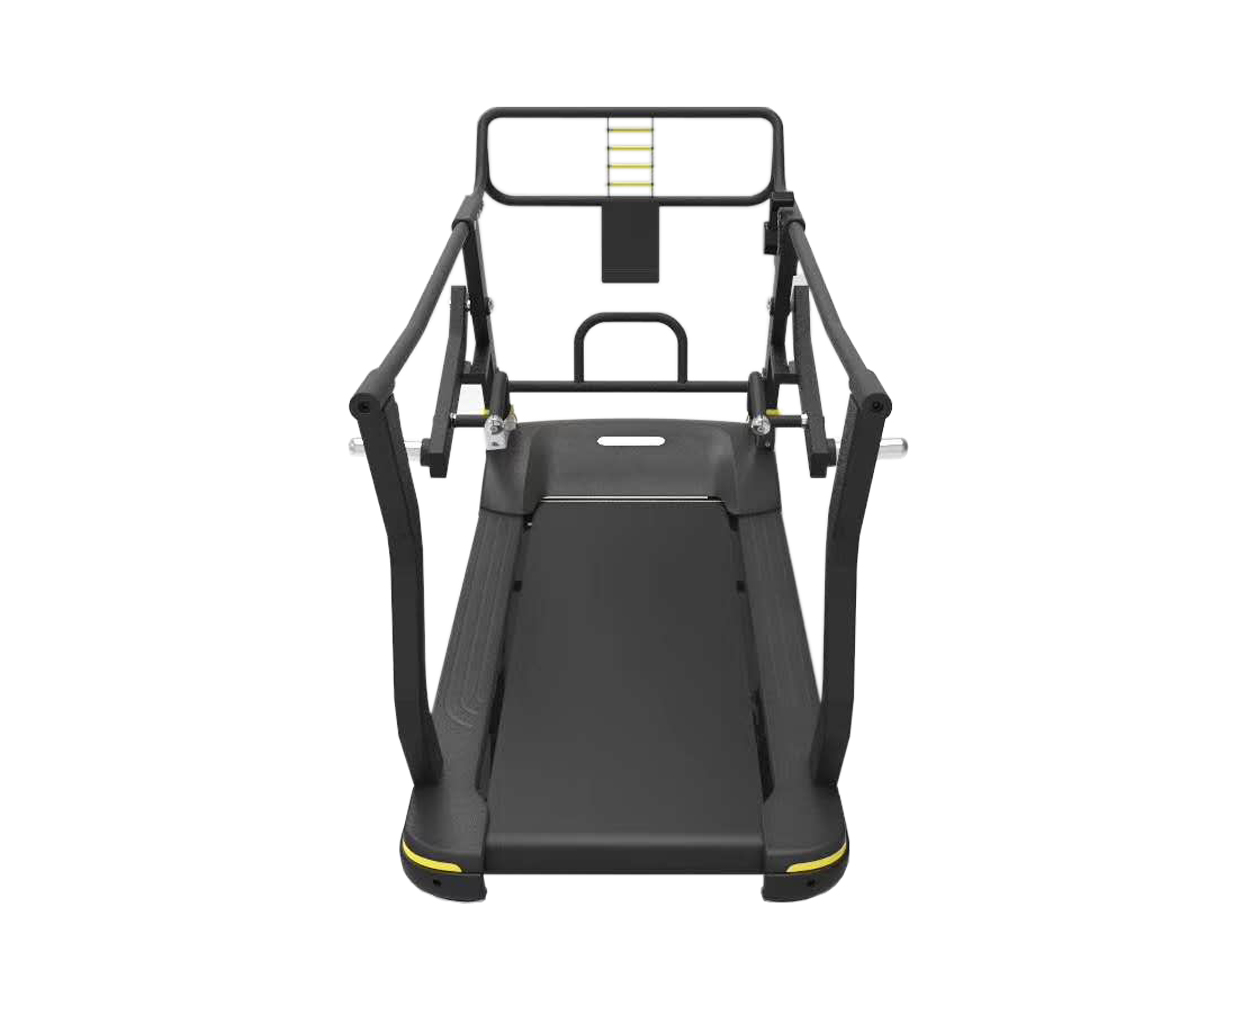 CM-613 Resistance Training Treadmill